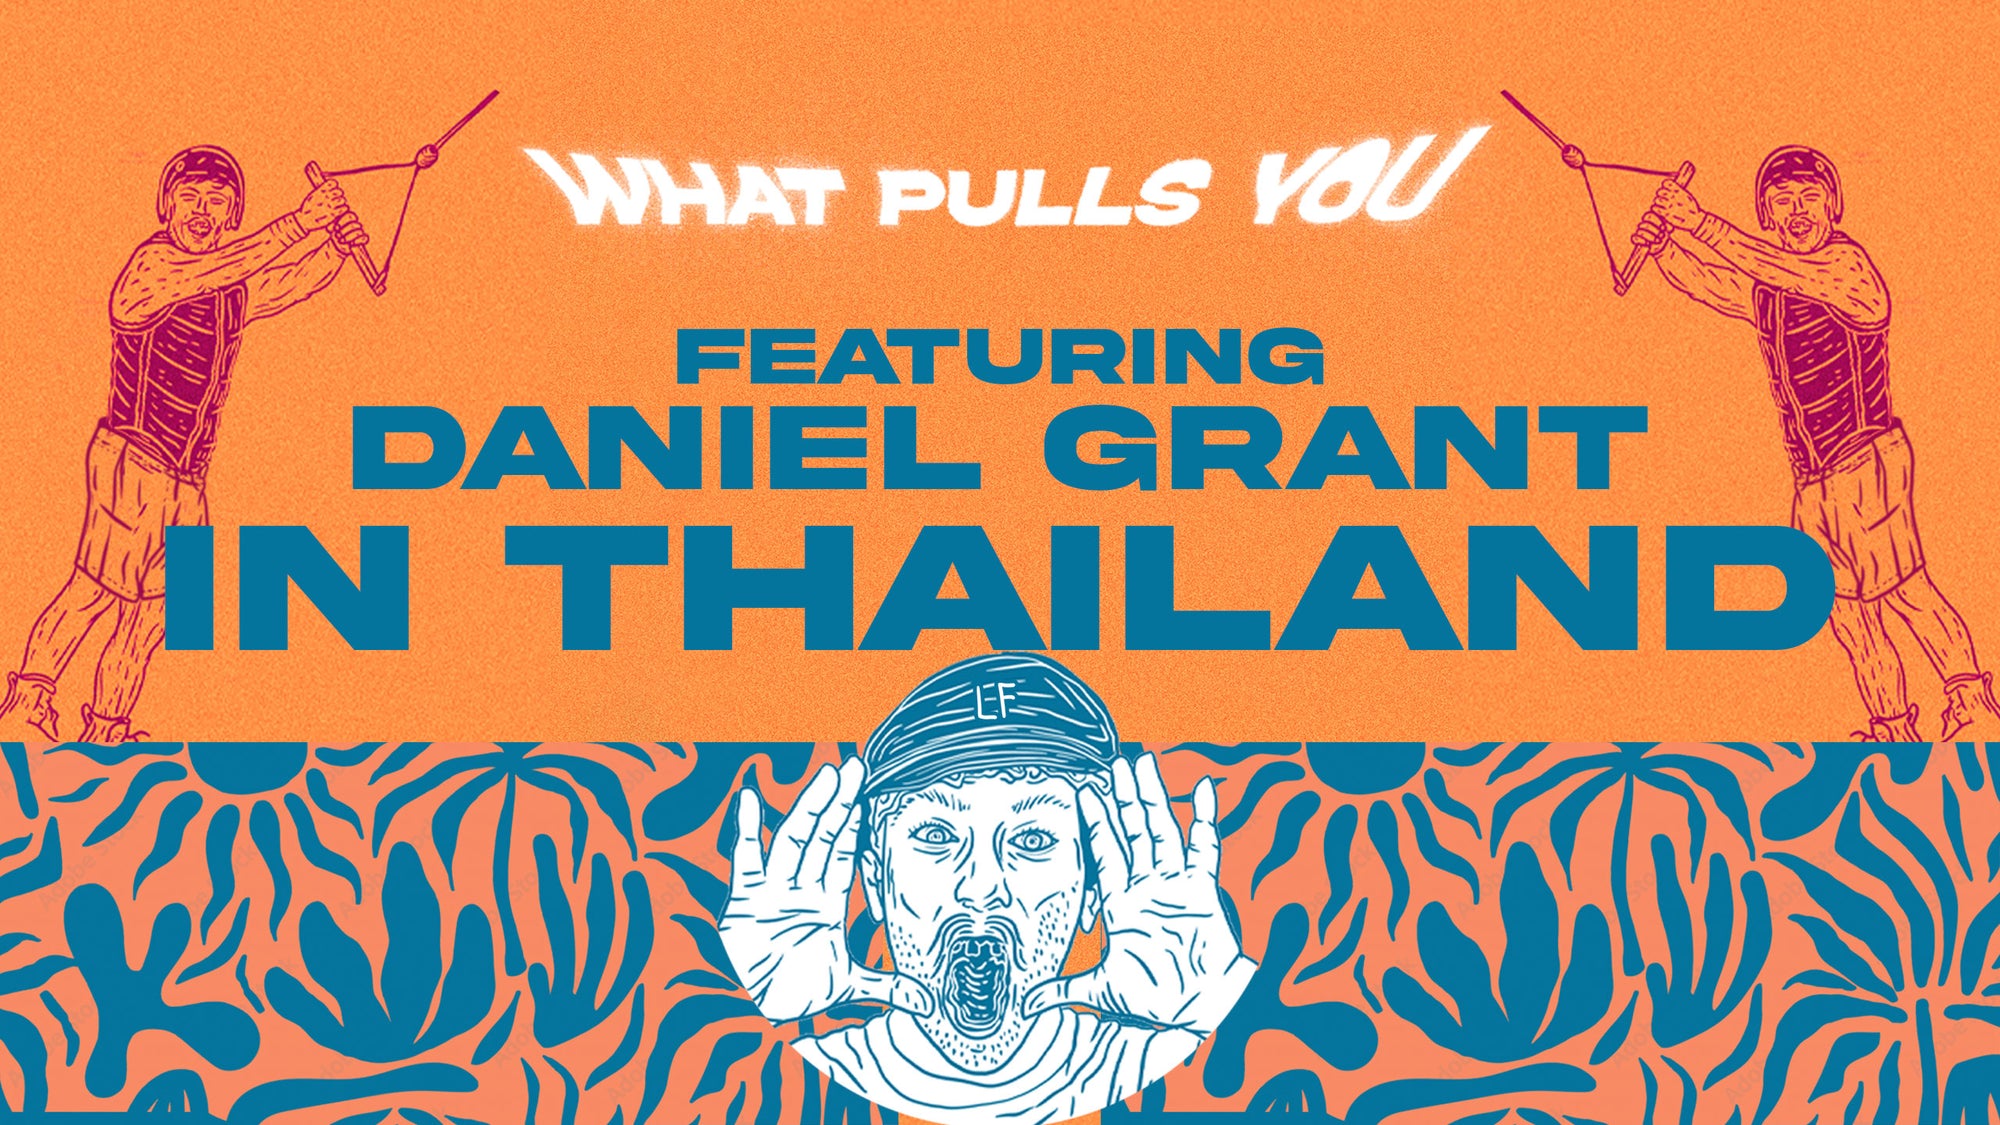 What Pulls You - Daniel Grant